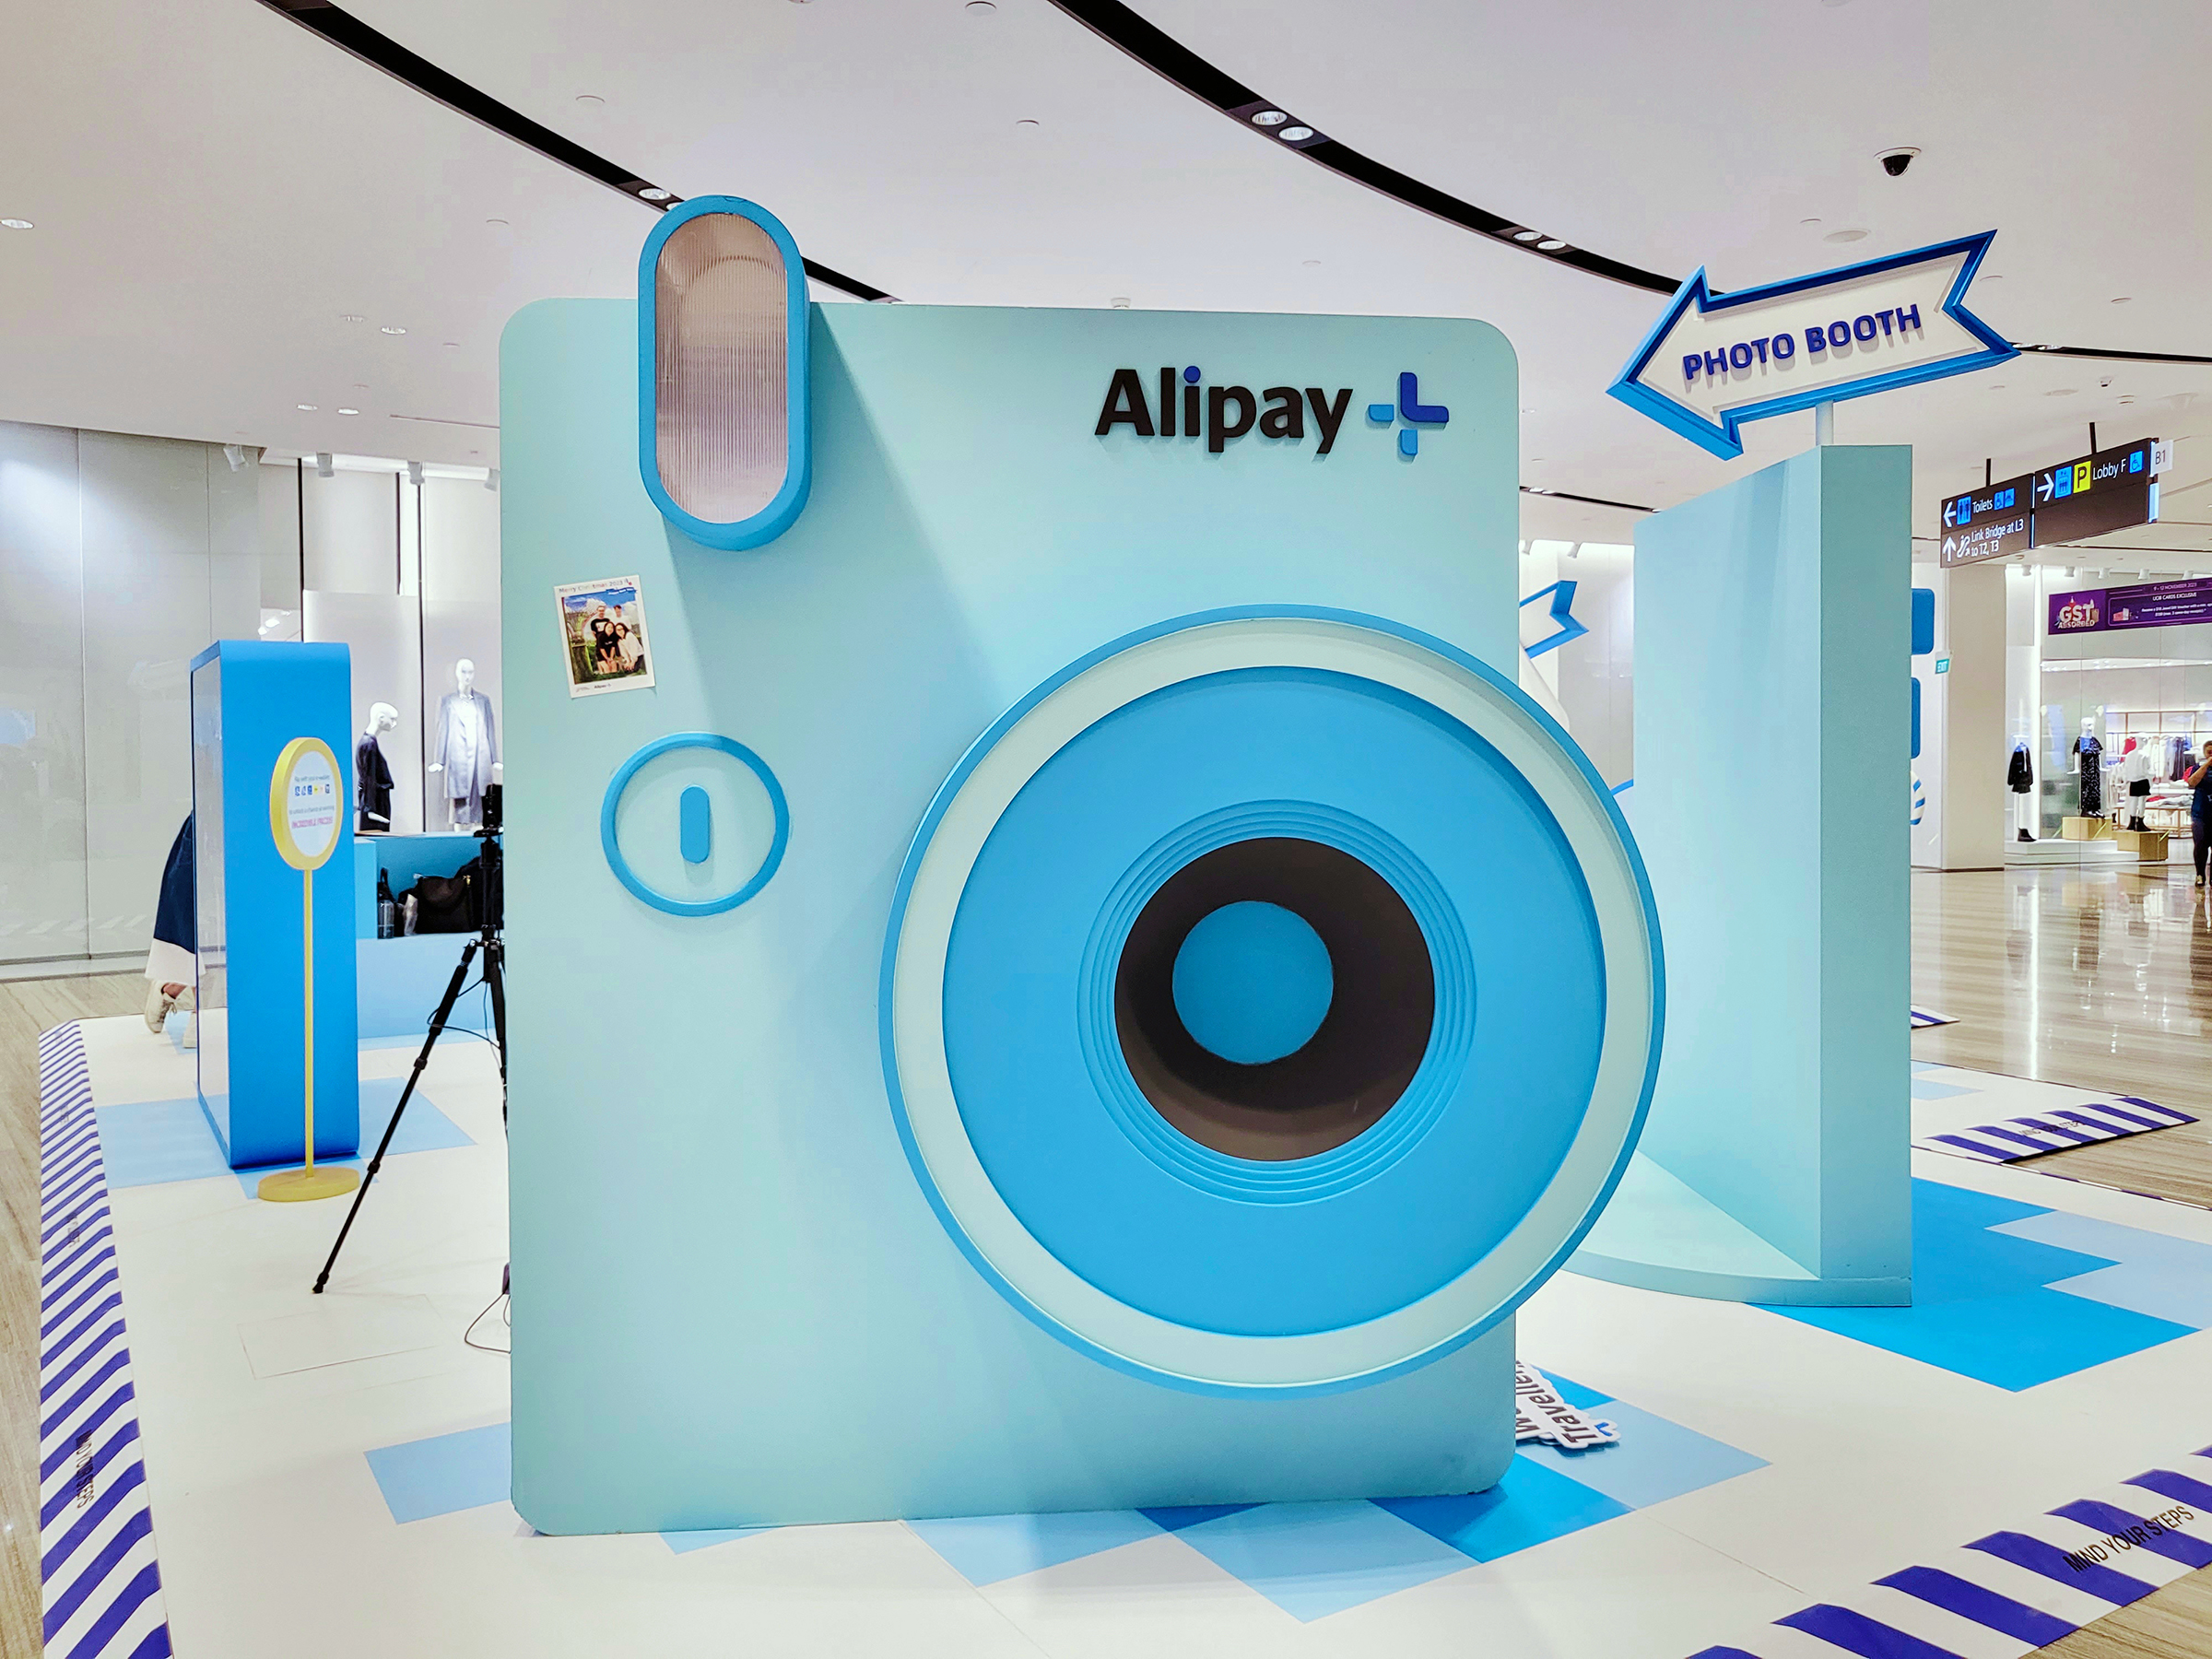 London Design Winner - Alipay+ Xmas Pop-up Store At Singapore Changi Airport